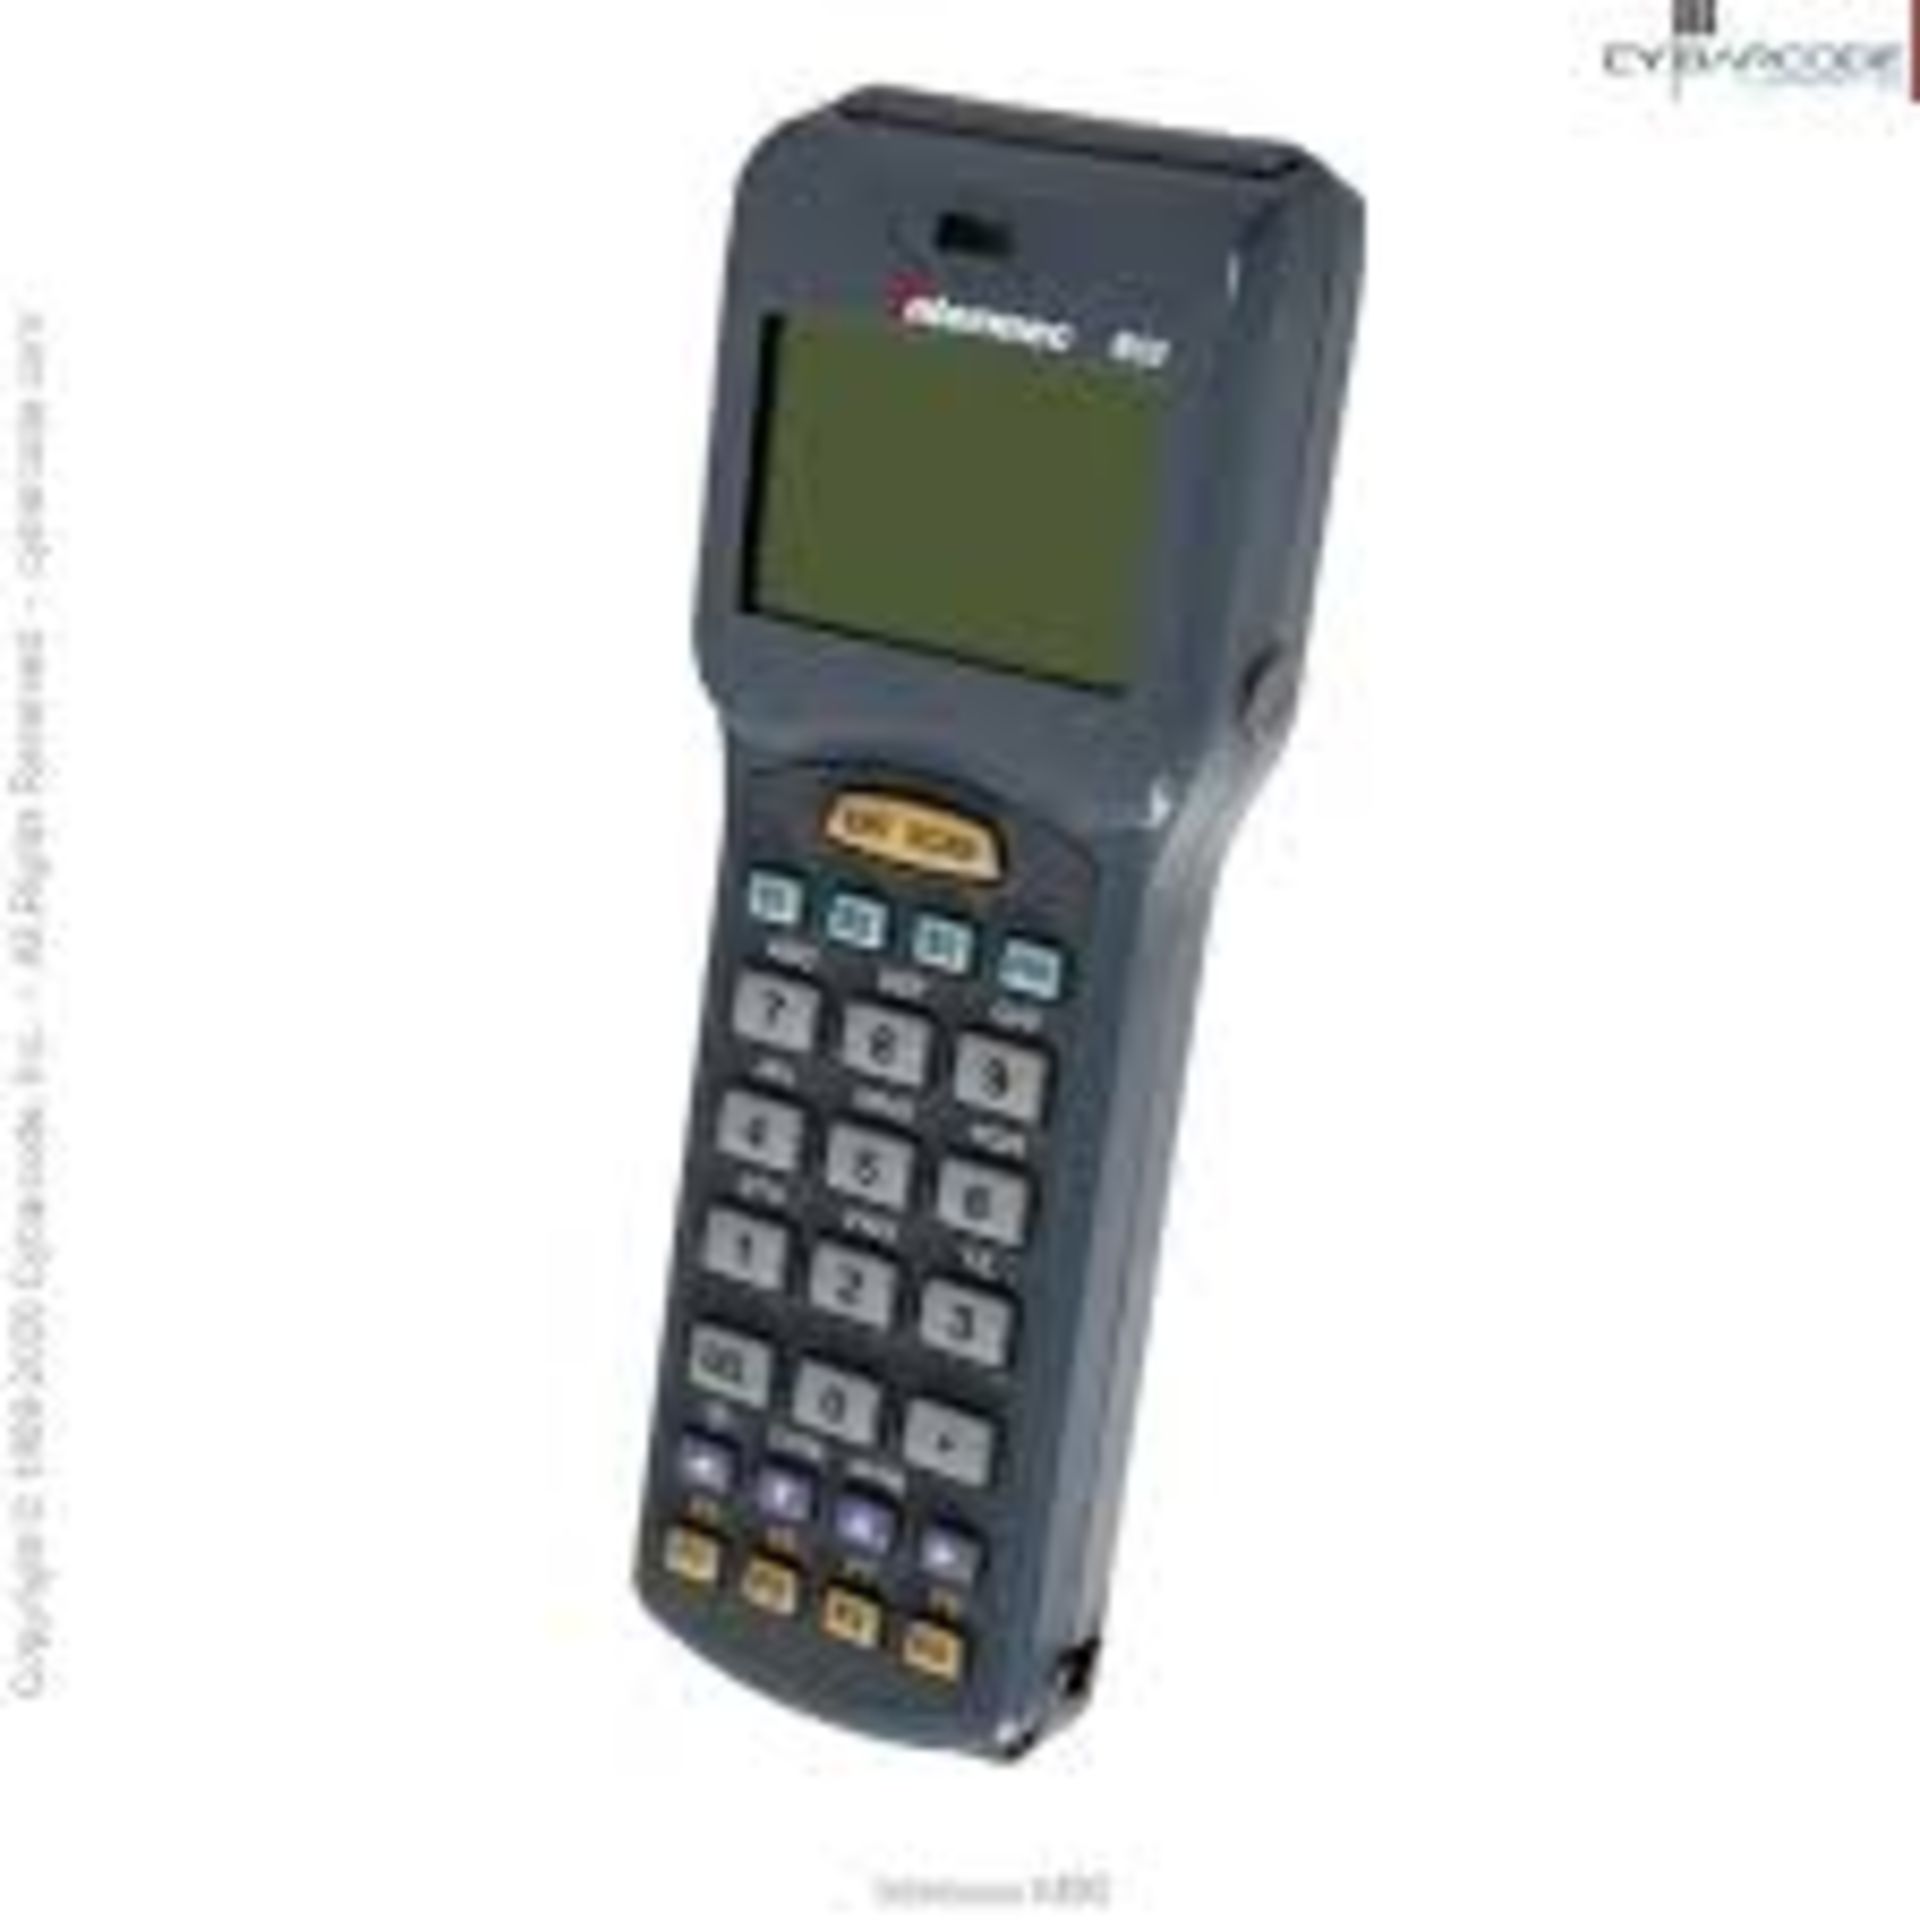 2 x Intermec M90 Portable Barcode Scanner - Used Condition - Location: Altrincham WA14 - - Image 8 of 8